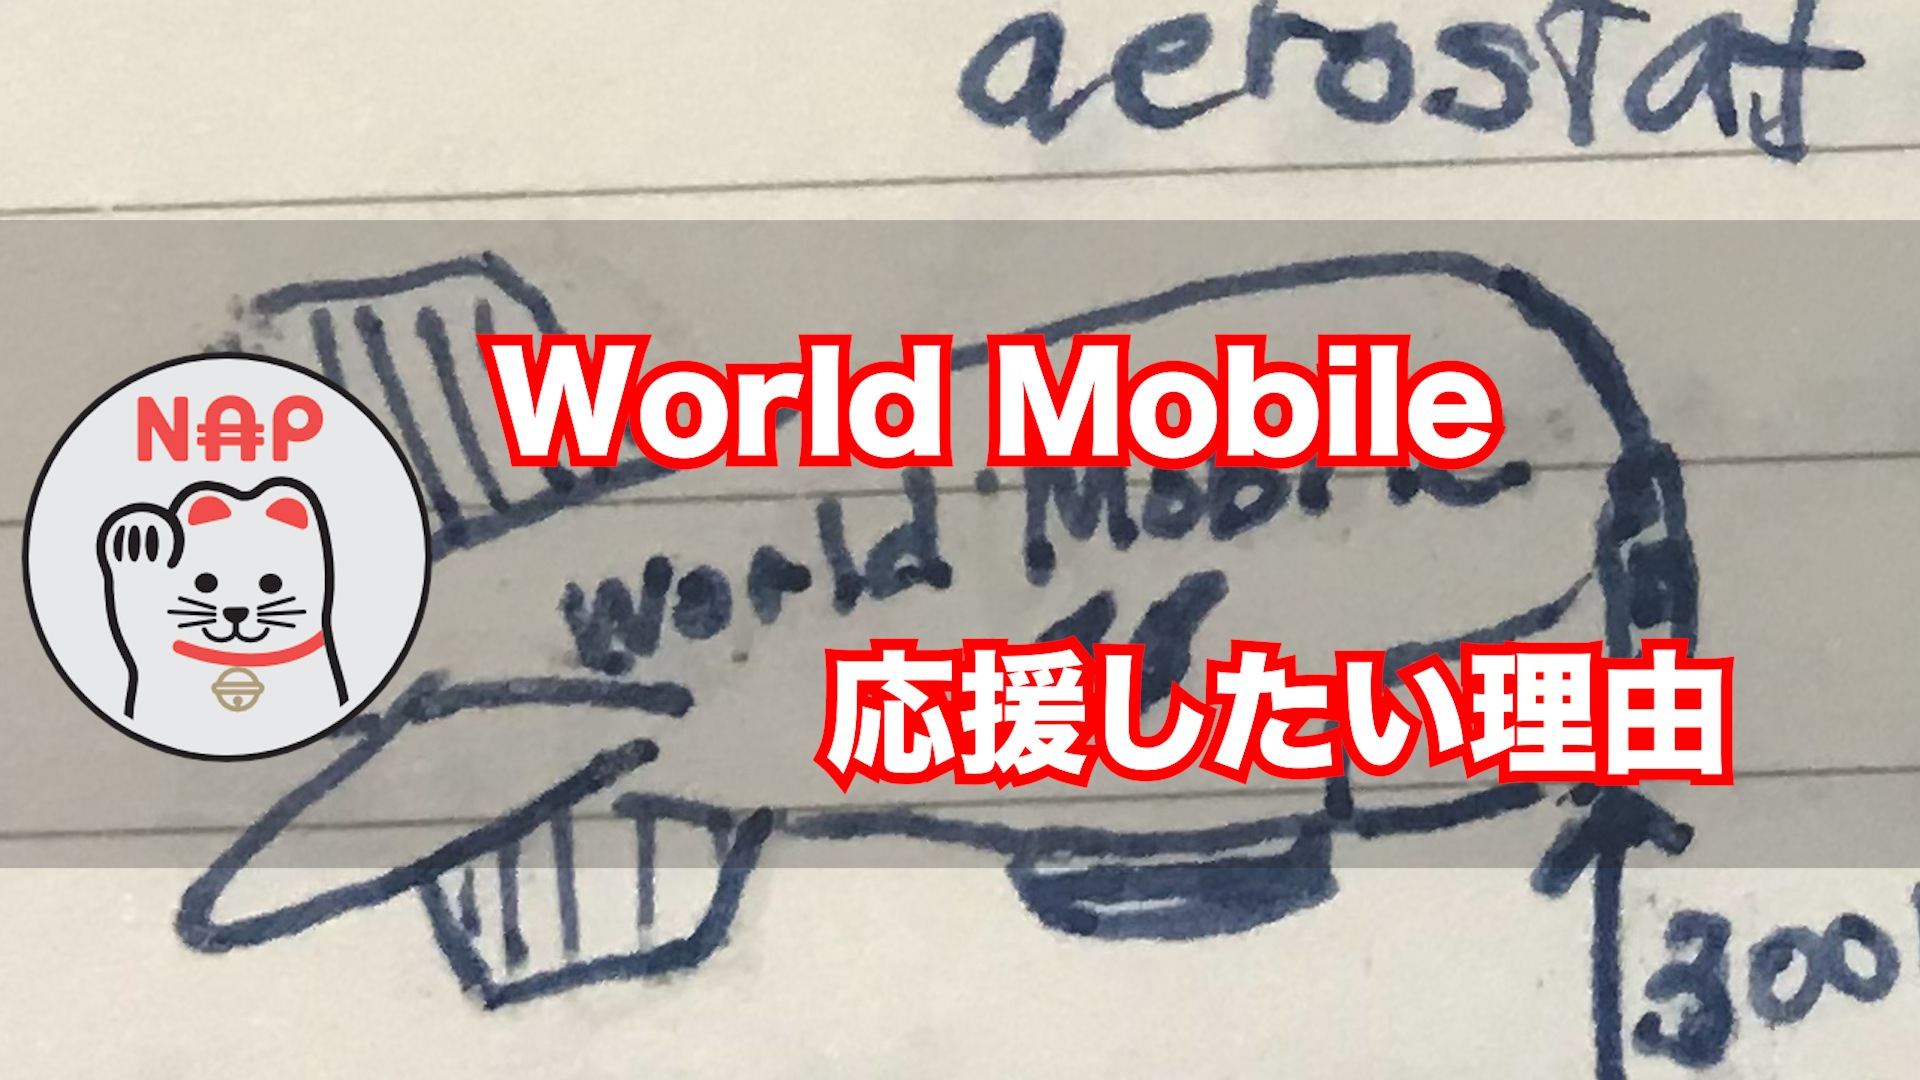 World Mobile サムネイル画像